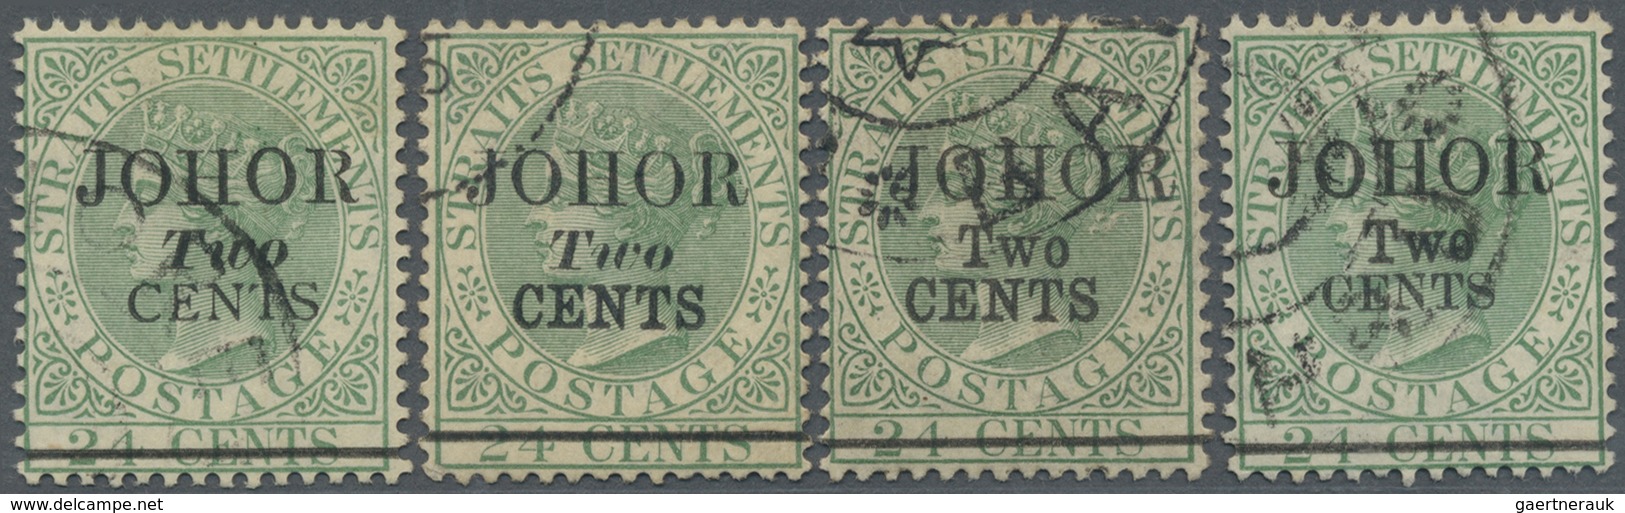 O Malaiische Staaten - Johor: 1891, Straits Settlements QV 24c. Green With Opt. 'JOHOR / Two / CENTS' - Johore